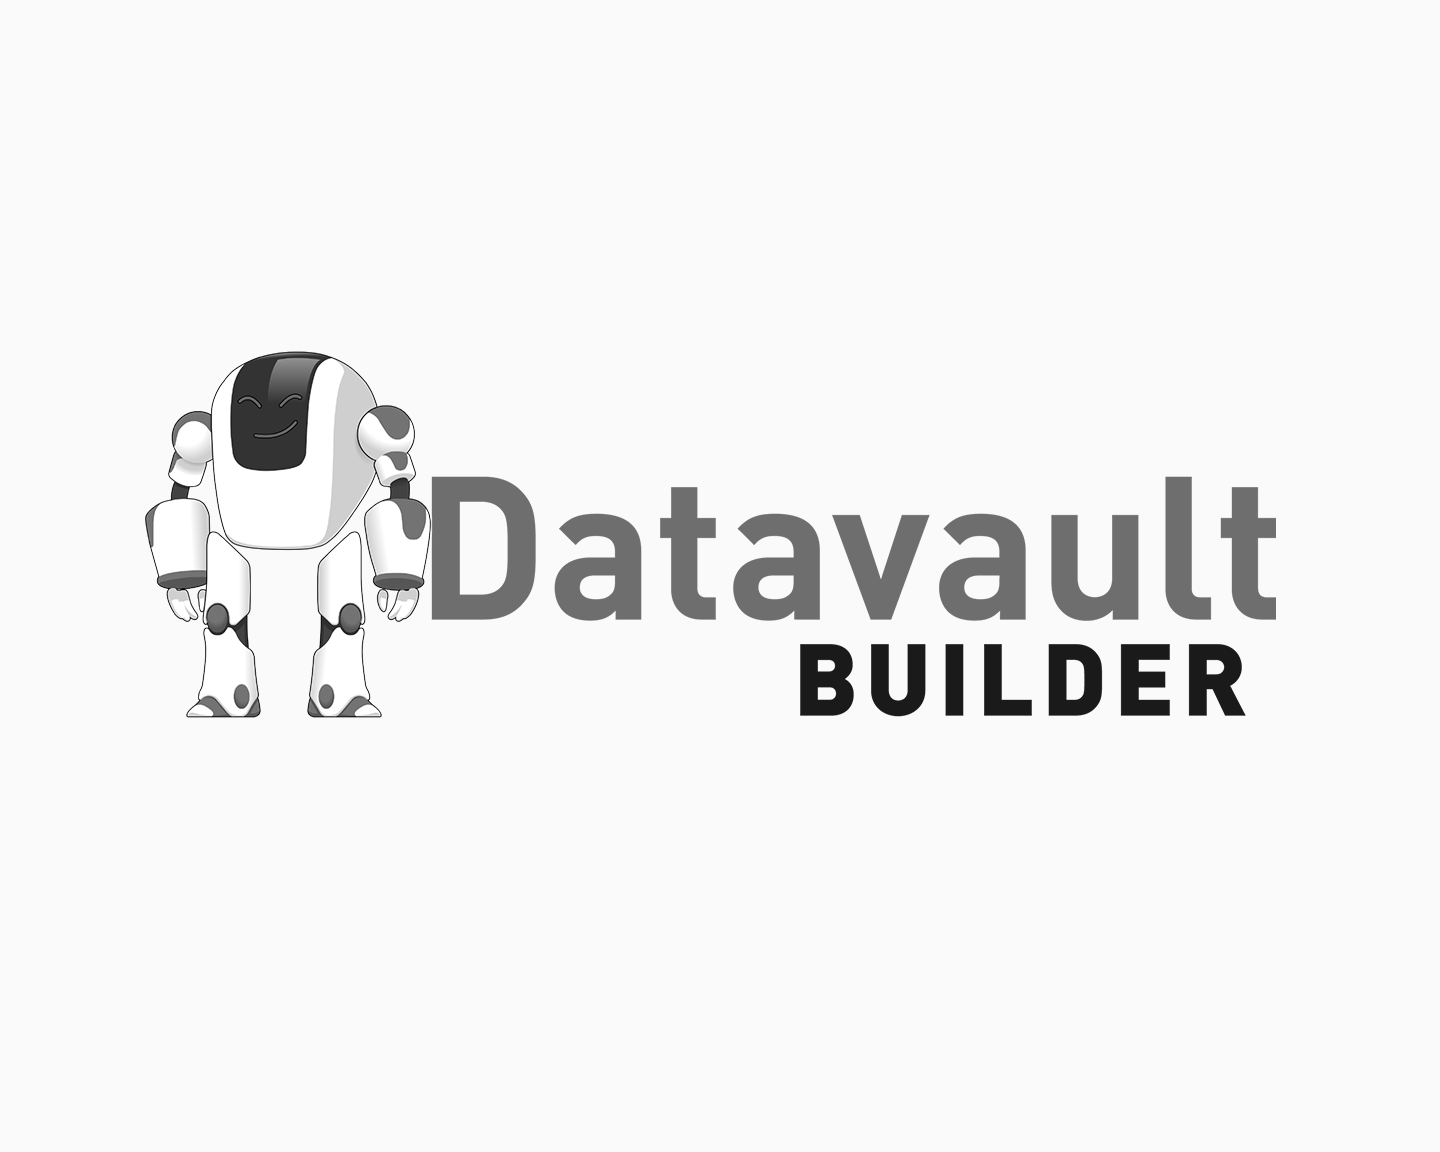 Datavault Builder